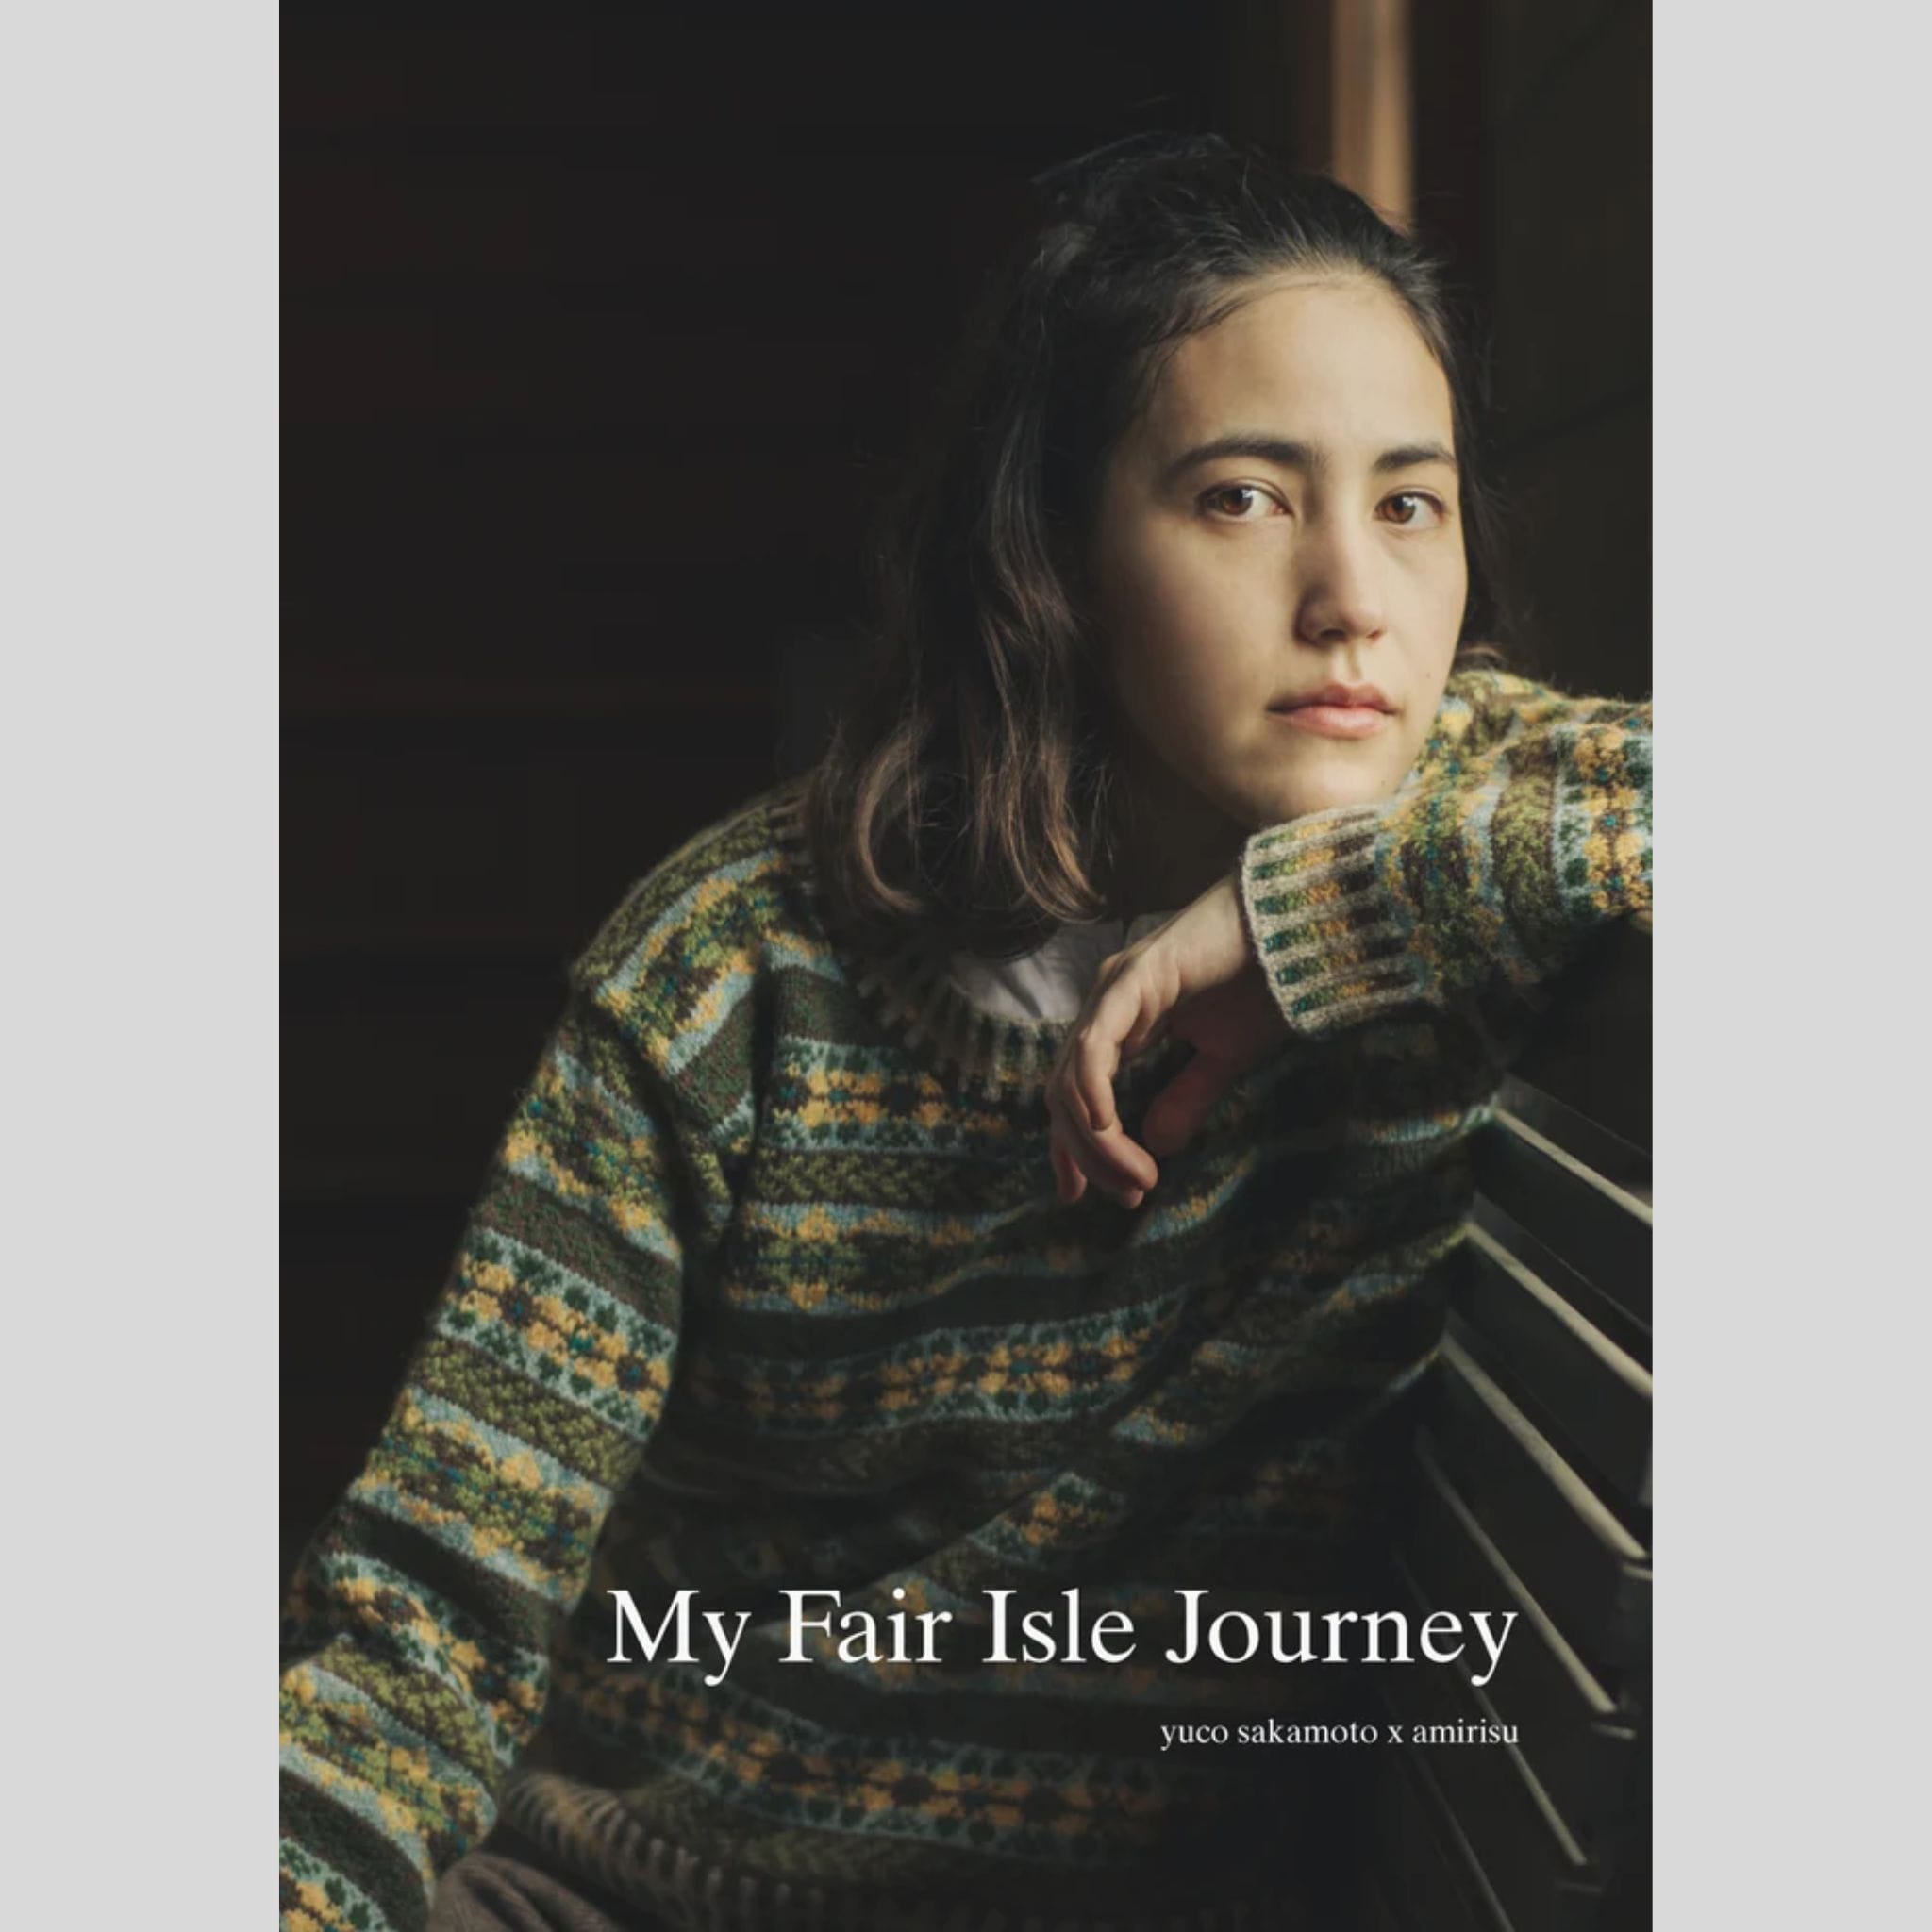 My Fair Isle Journey by Yuco Sakamoto